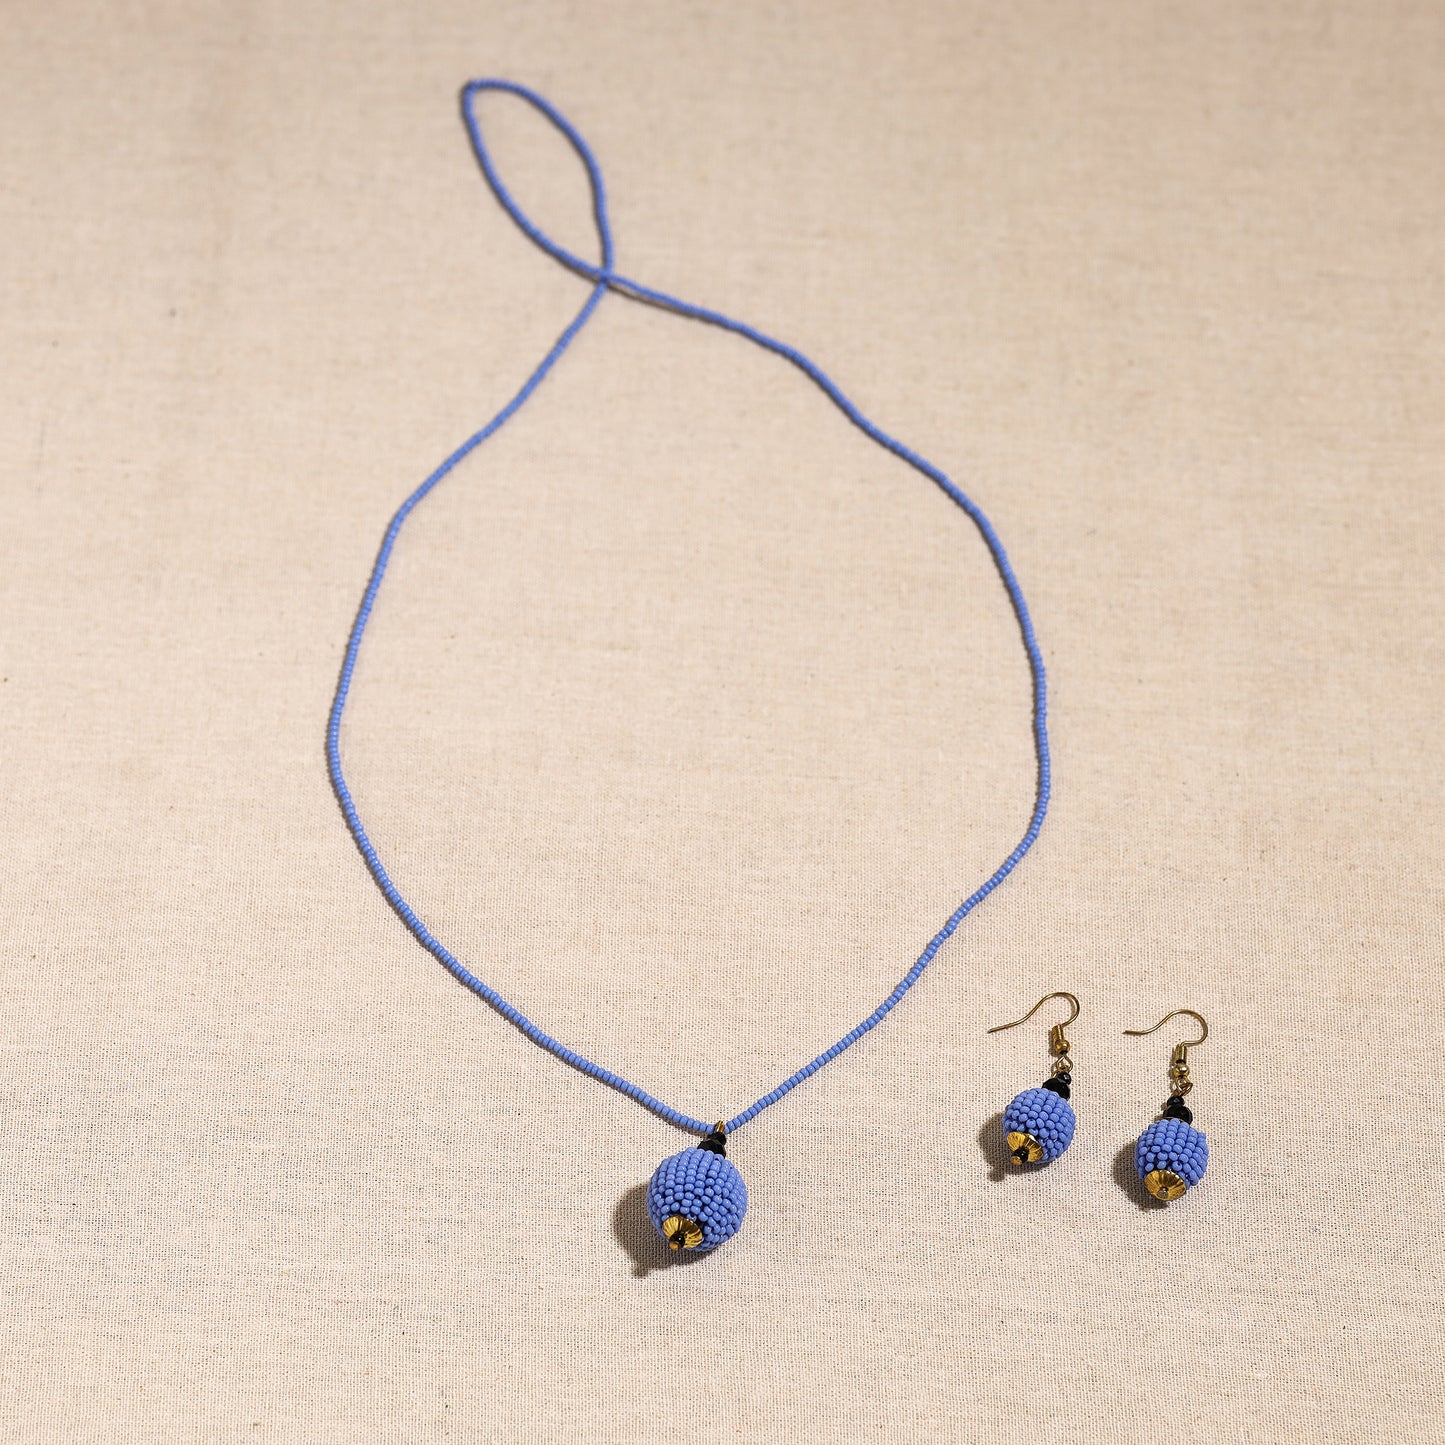 Handmade Beadwork Chain with Pendant & Earrings Set